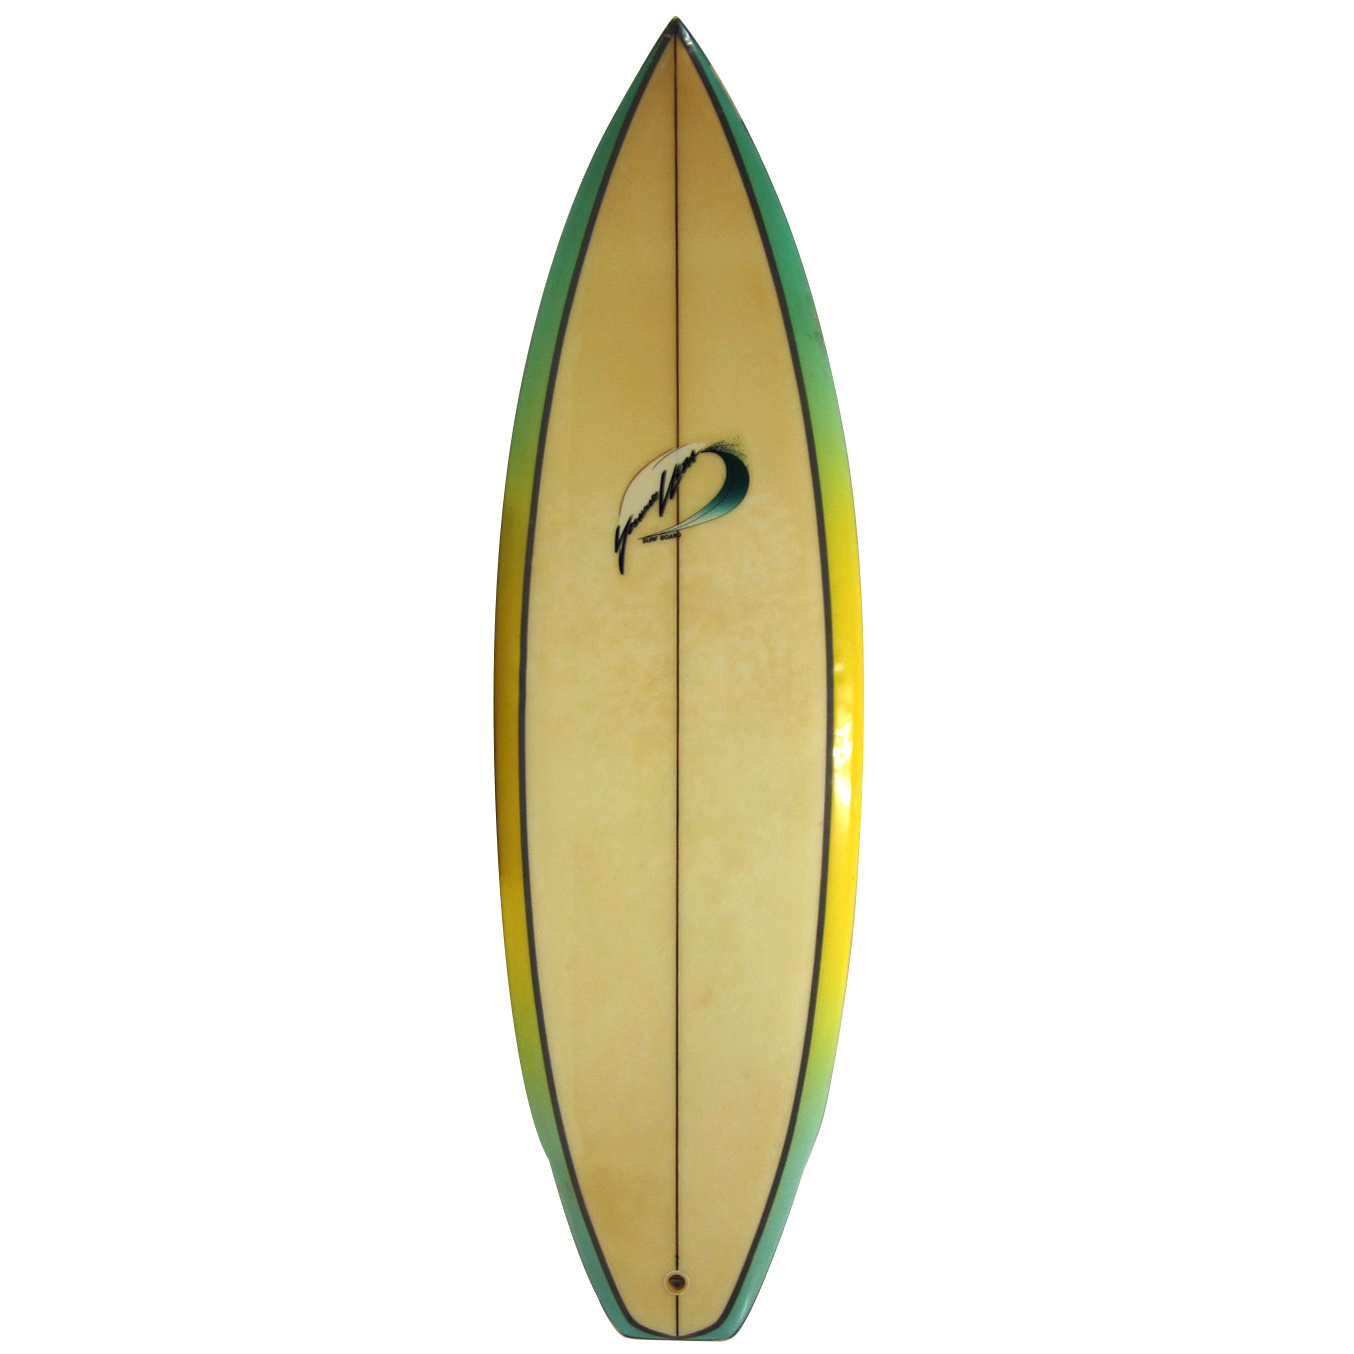  / Yoshinori Ueda Surfboards / Vintage Thruster 